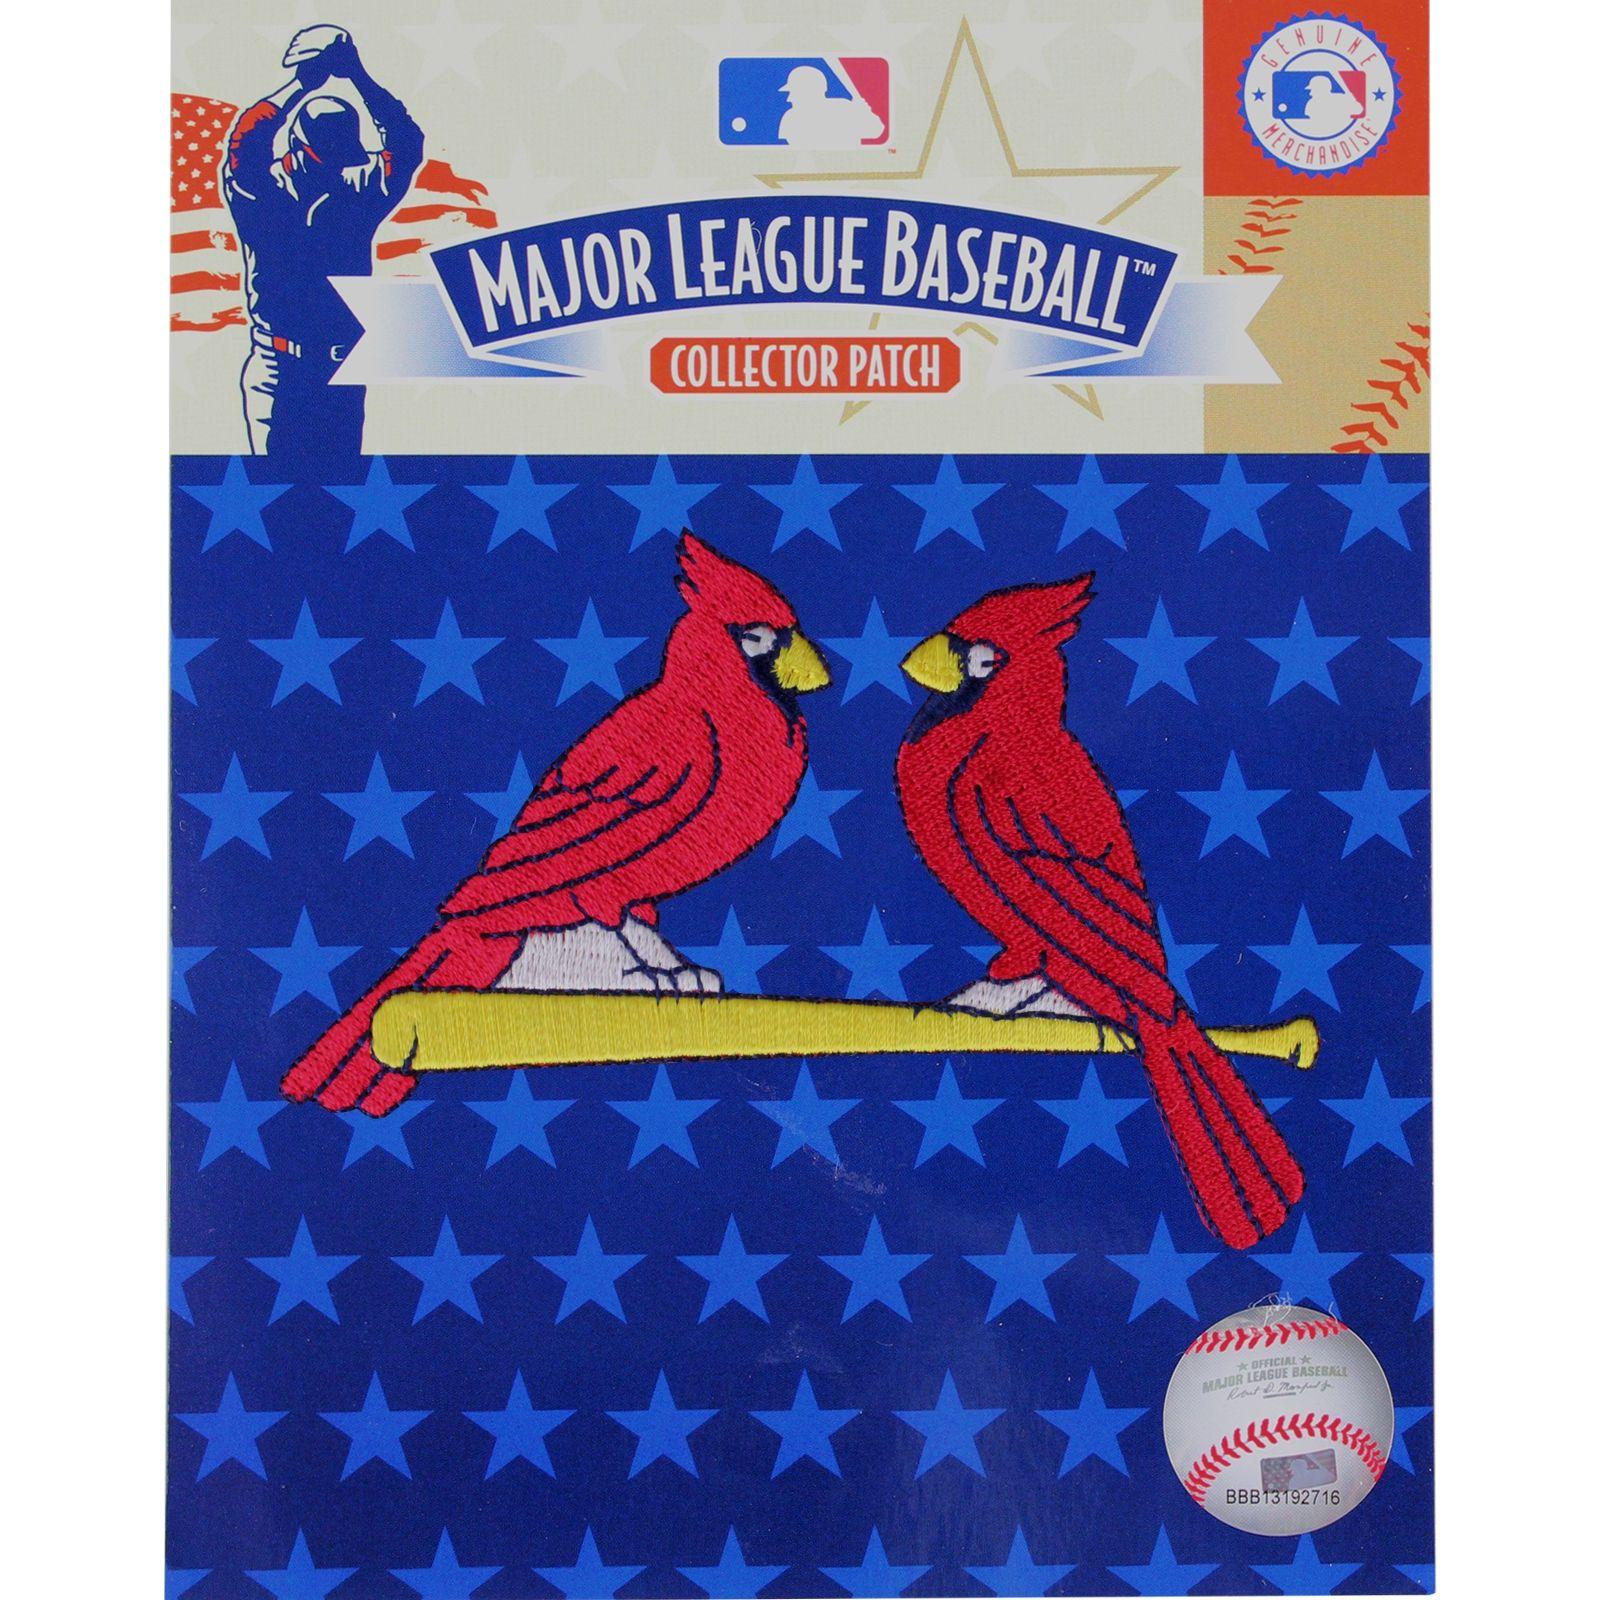 The Birds On Bat Cardinals Logo - St. Louis Cardinals Team Red Birds On Bat Logo Sleeve Patch Jersey